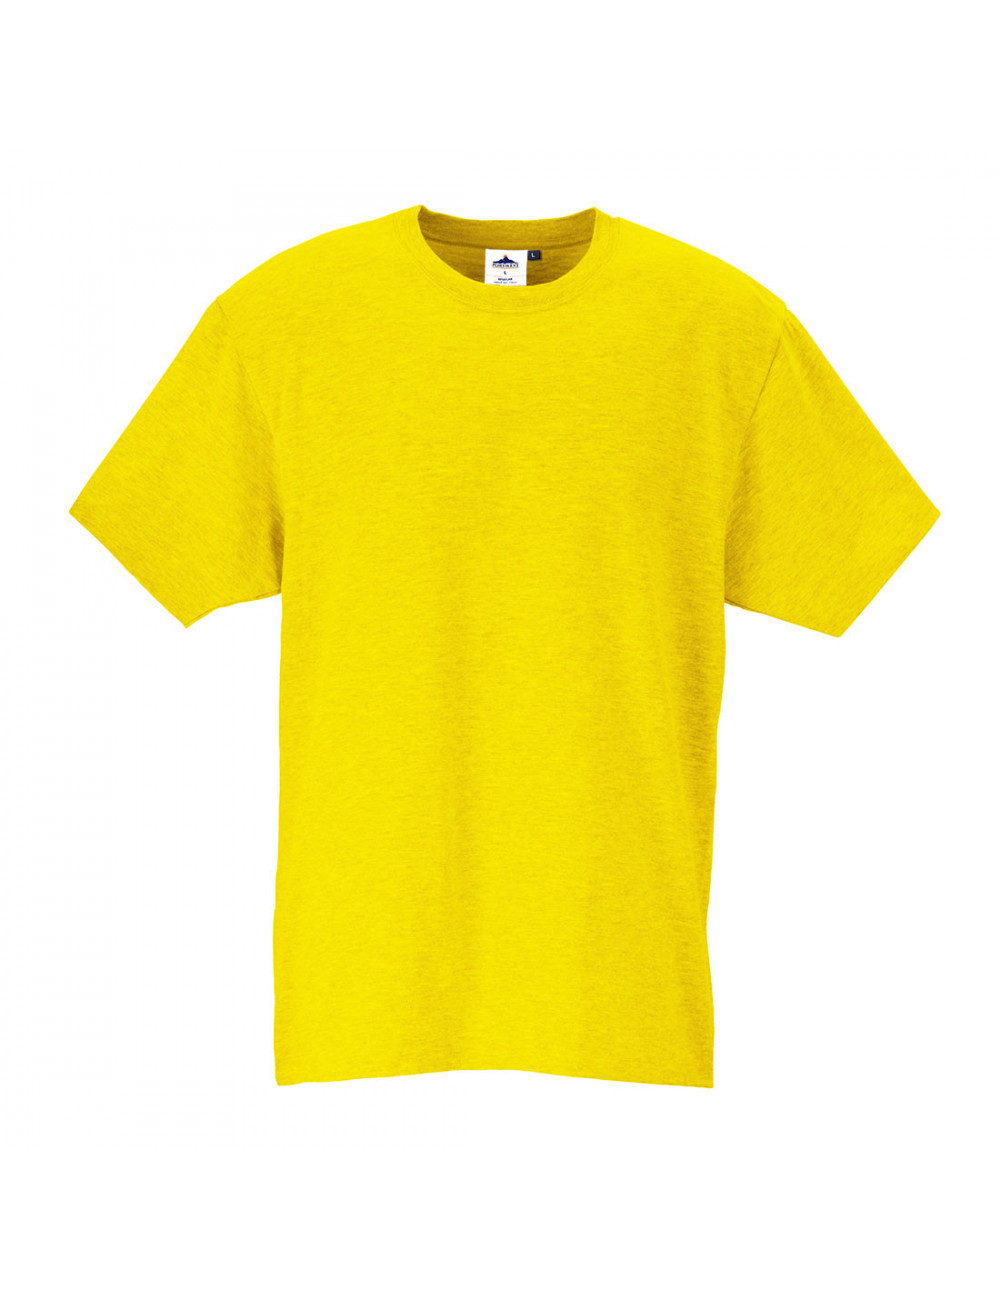 Turin premium t-shirt yellow Portwest